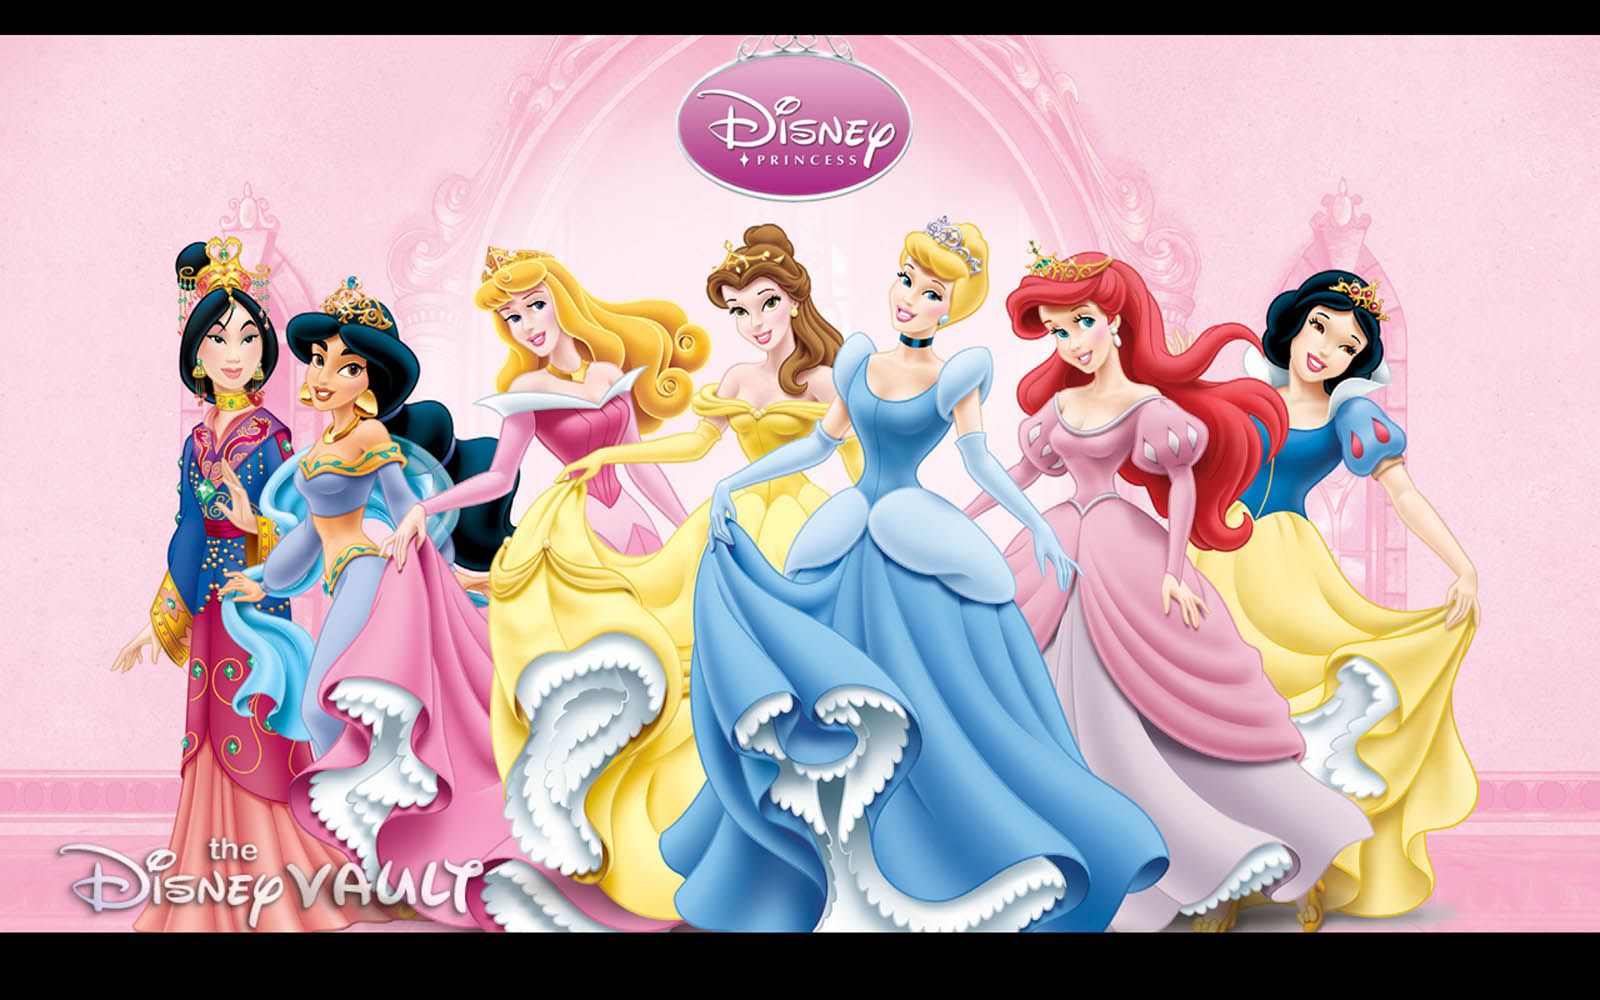 Disney Project: fondos de pantalla: Disney Princess Wallpapers